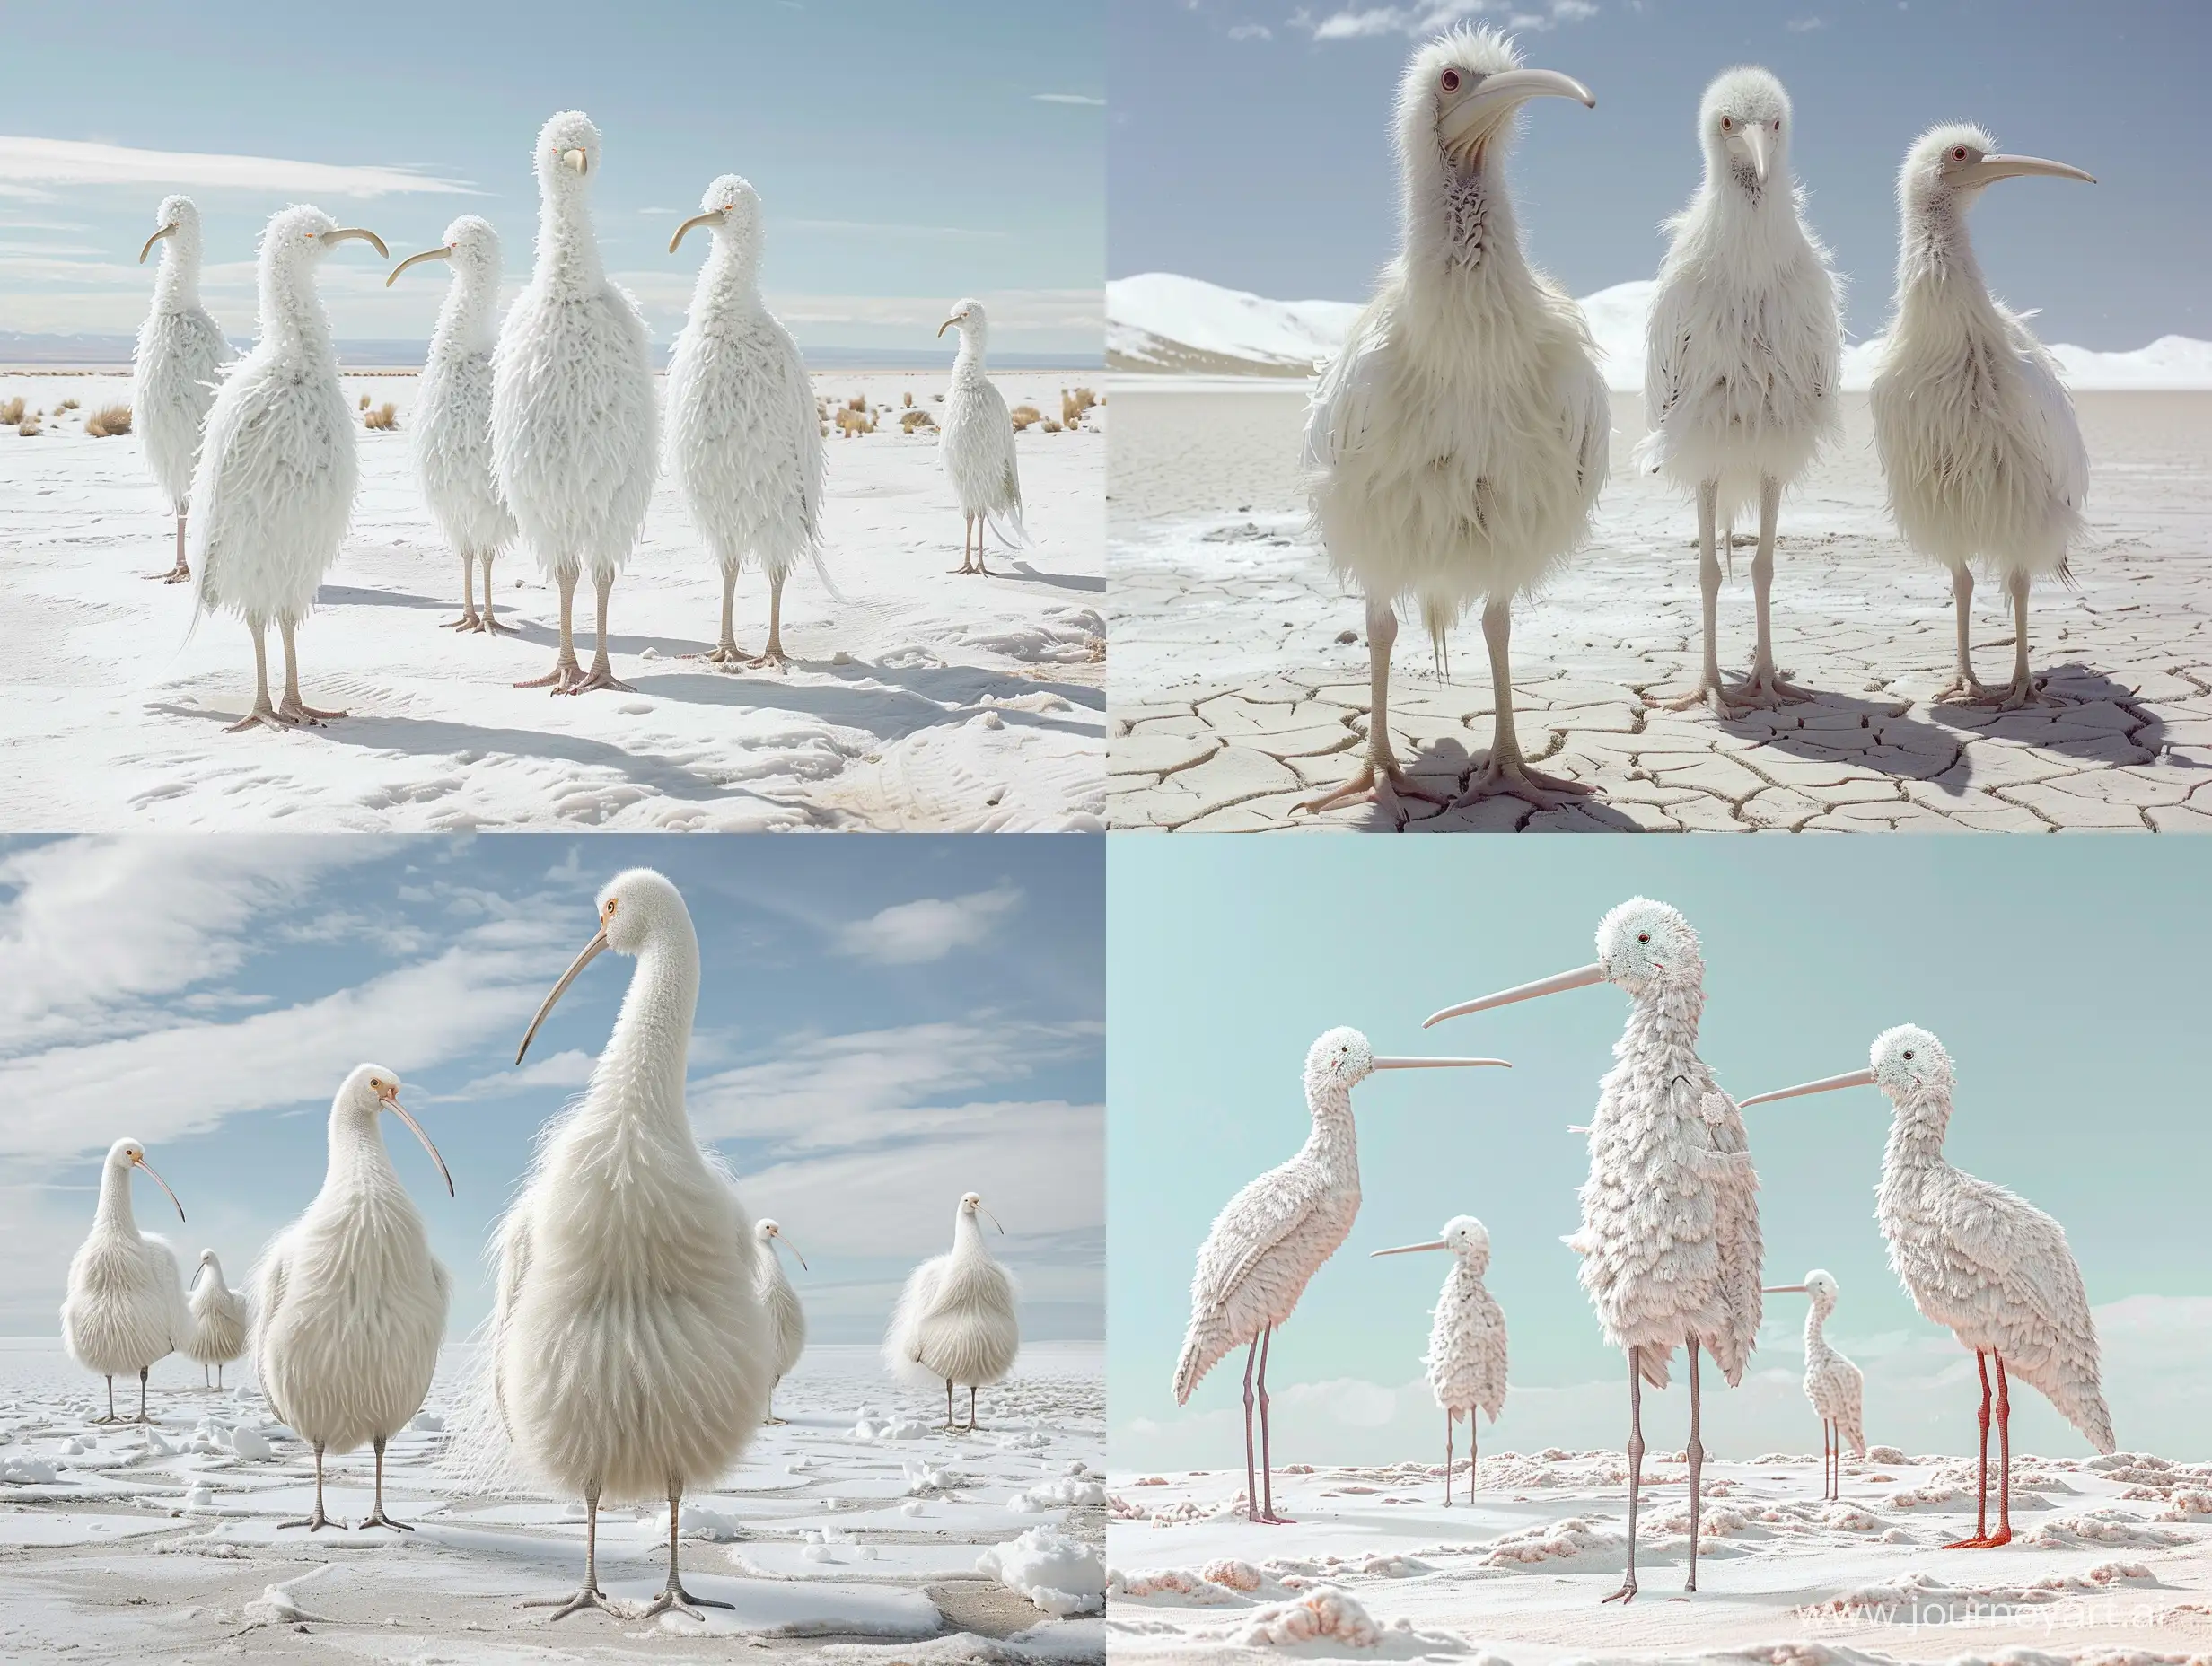 Snowy-Desert-Encounter-Tall-White-Kiwi-Birds-Resembling-Humans